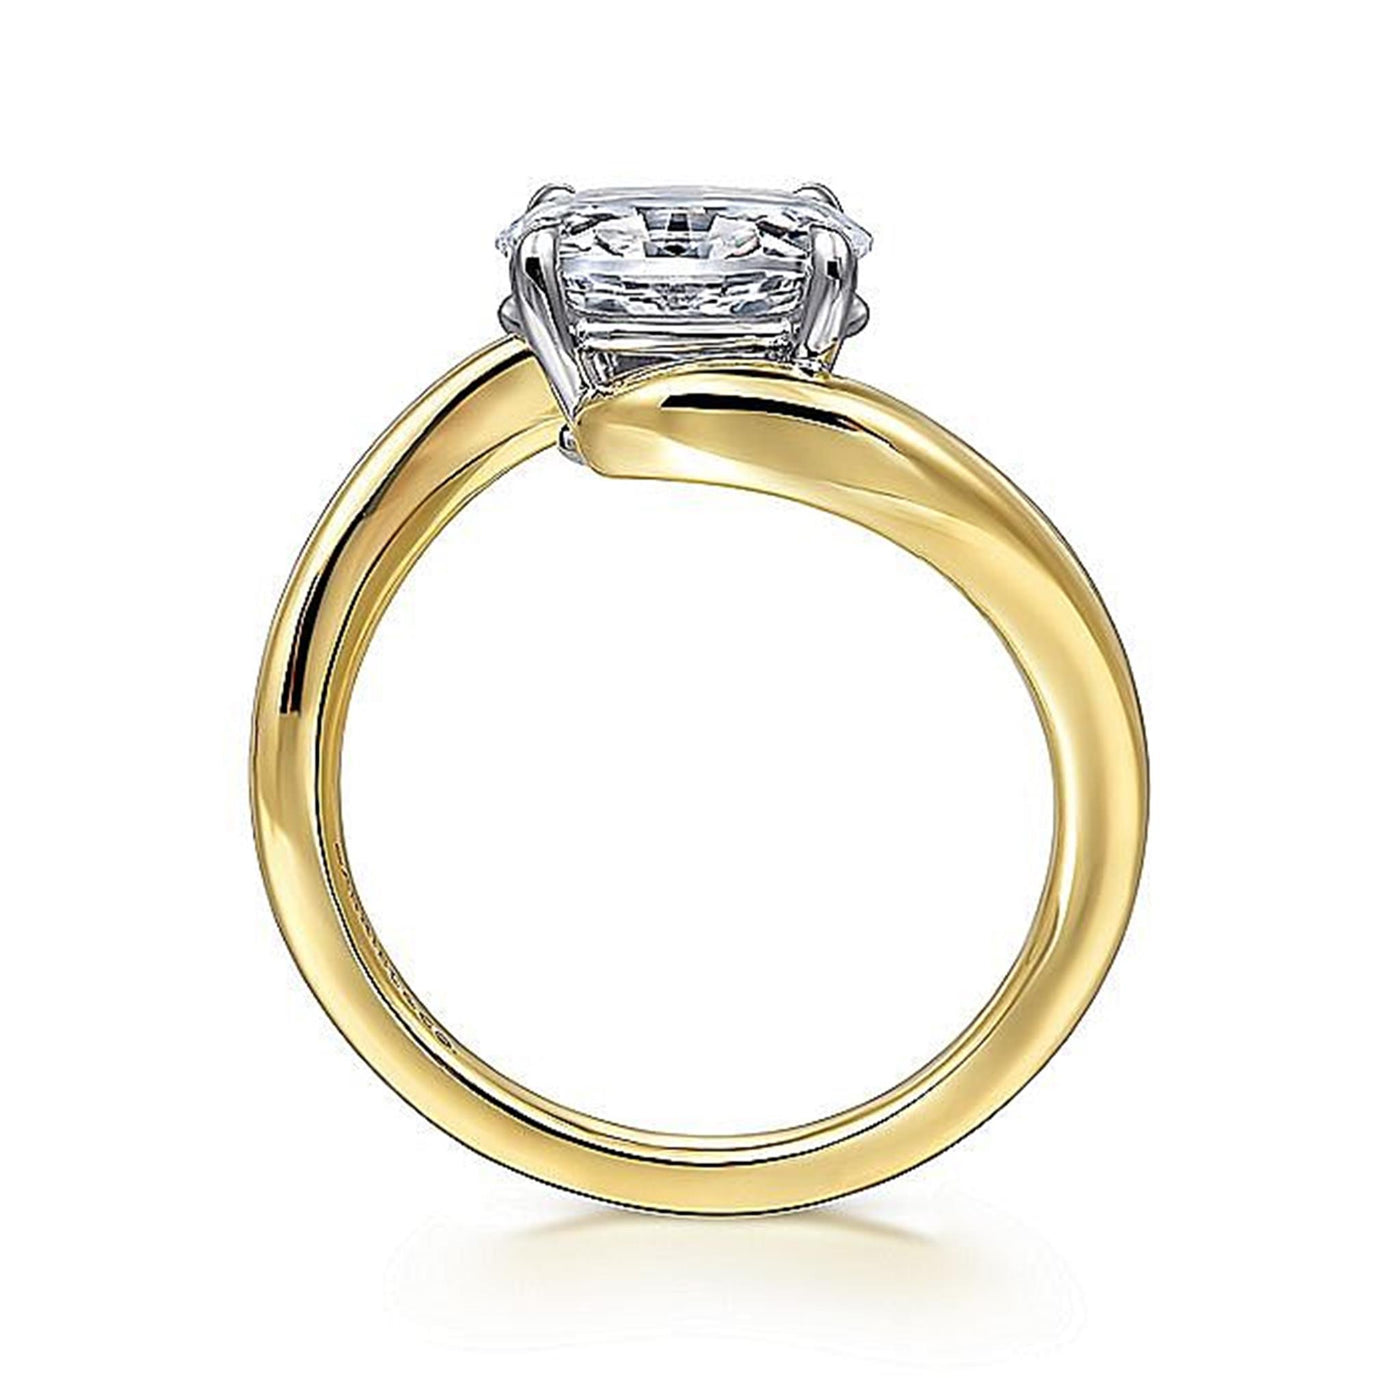 Gabriel 14K White & Yellow Gold 2.5ctw 4 Prong Style Diamond Semi-Mount Engagement Ring